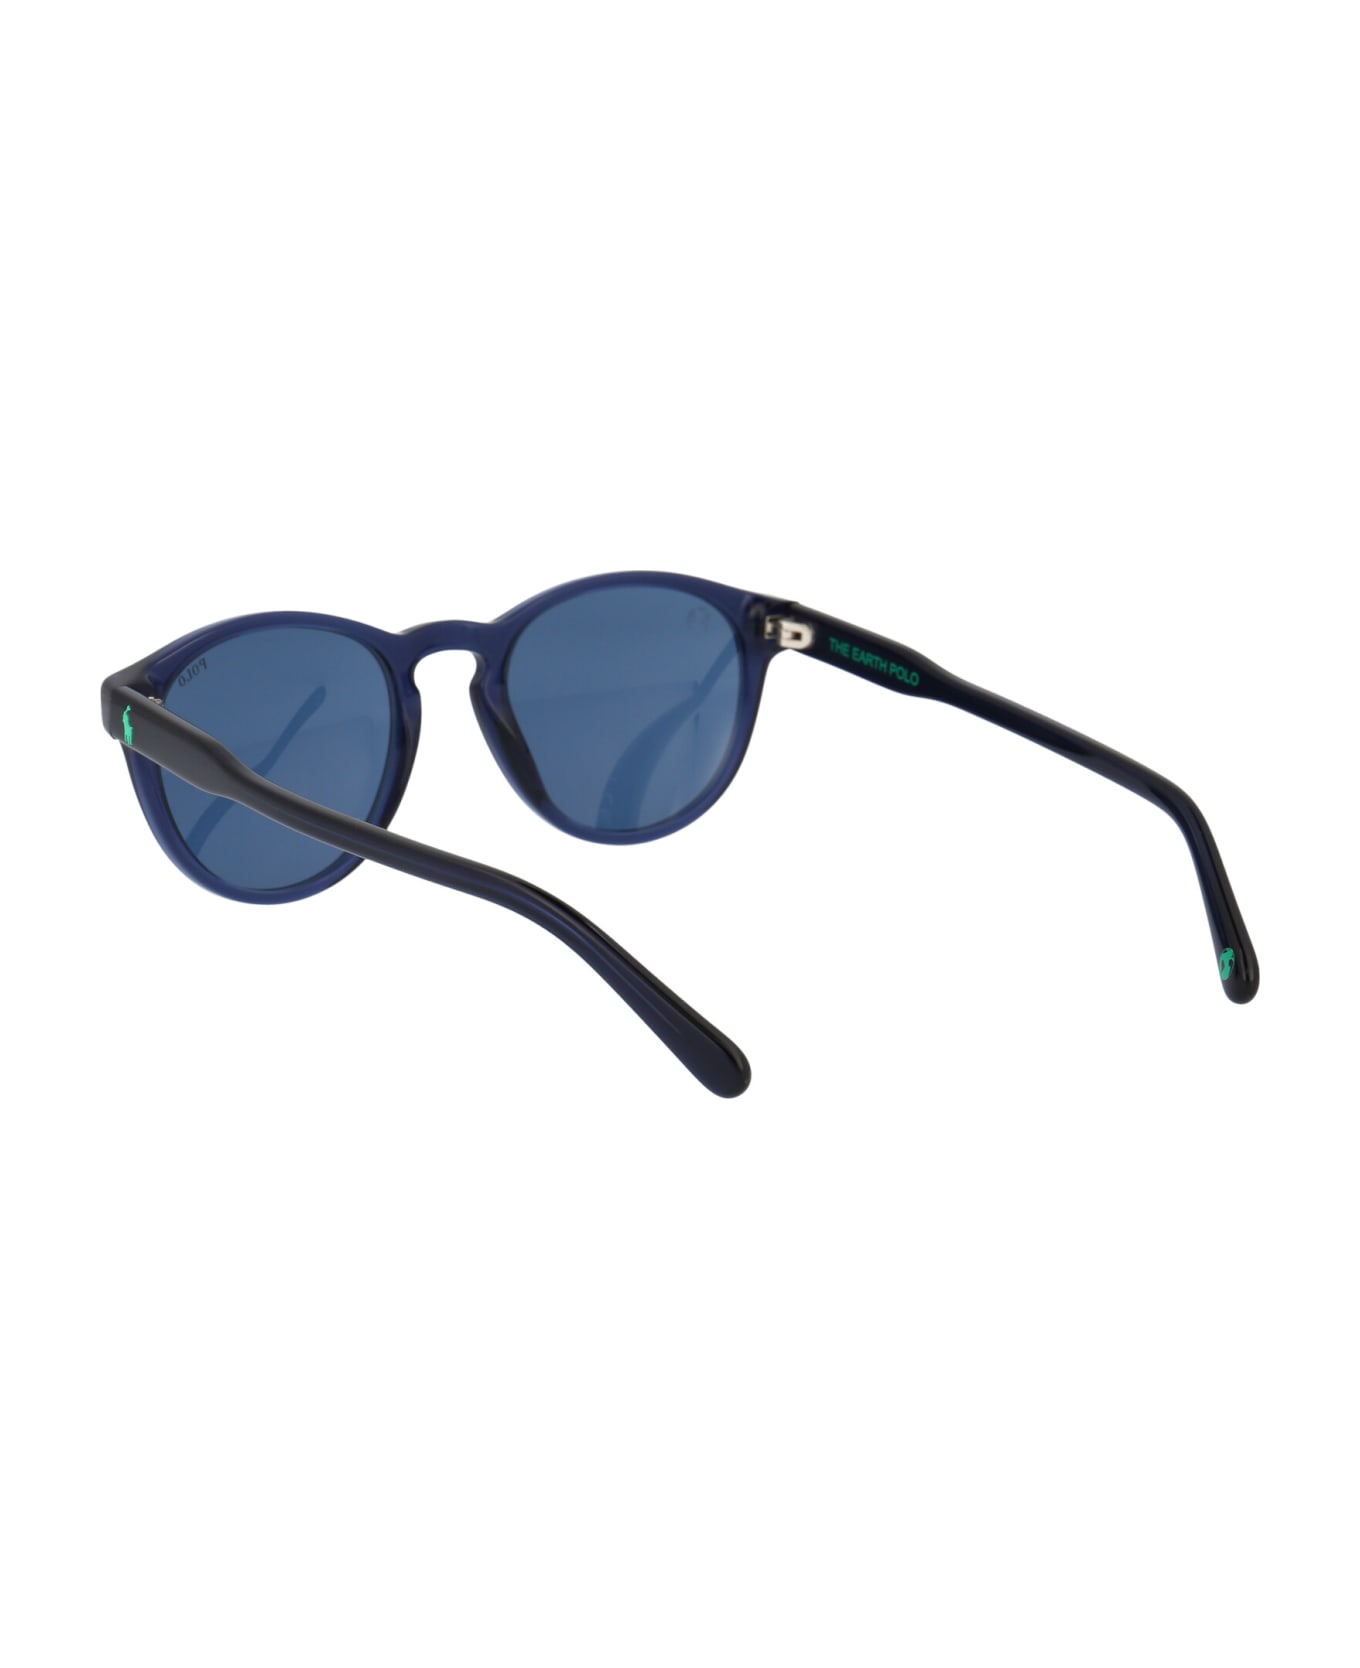 Polo Ralph Lauren 0ph4172 Sunglasses - 595580 SHINY TRANSPARENT BLUE サングラス